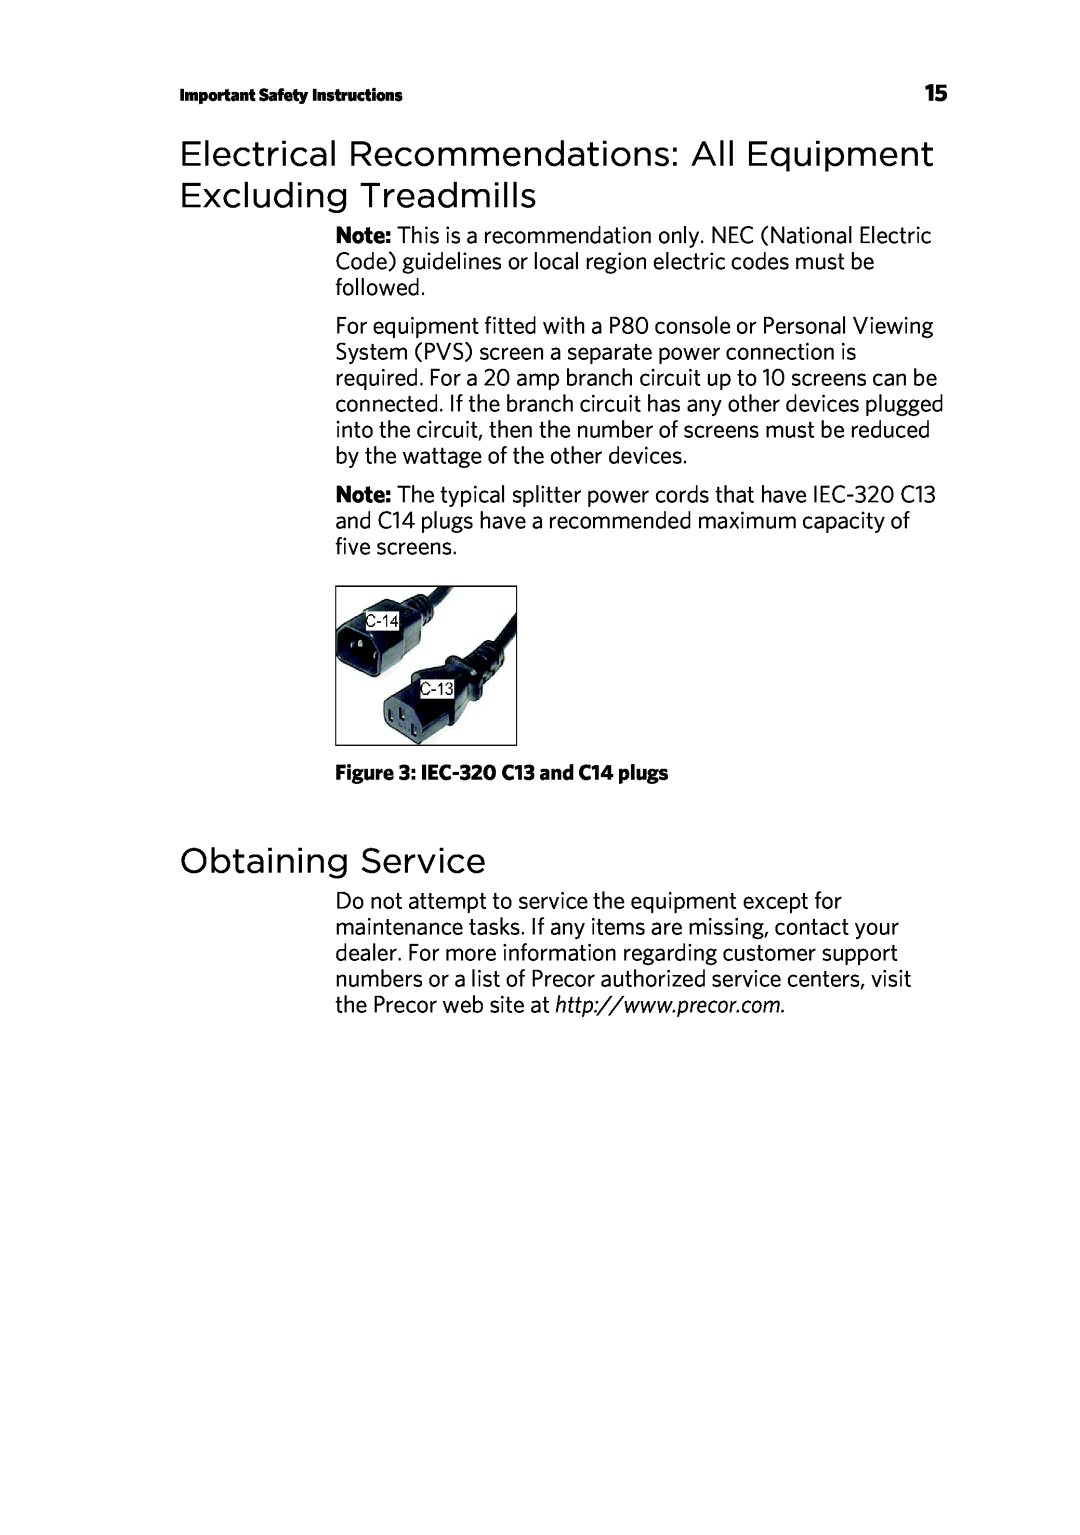 Precor P80 manual Obtaining Service, IEC-320C13 and C14 plugs 